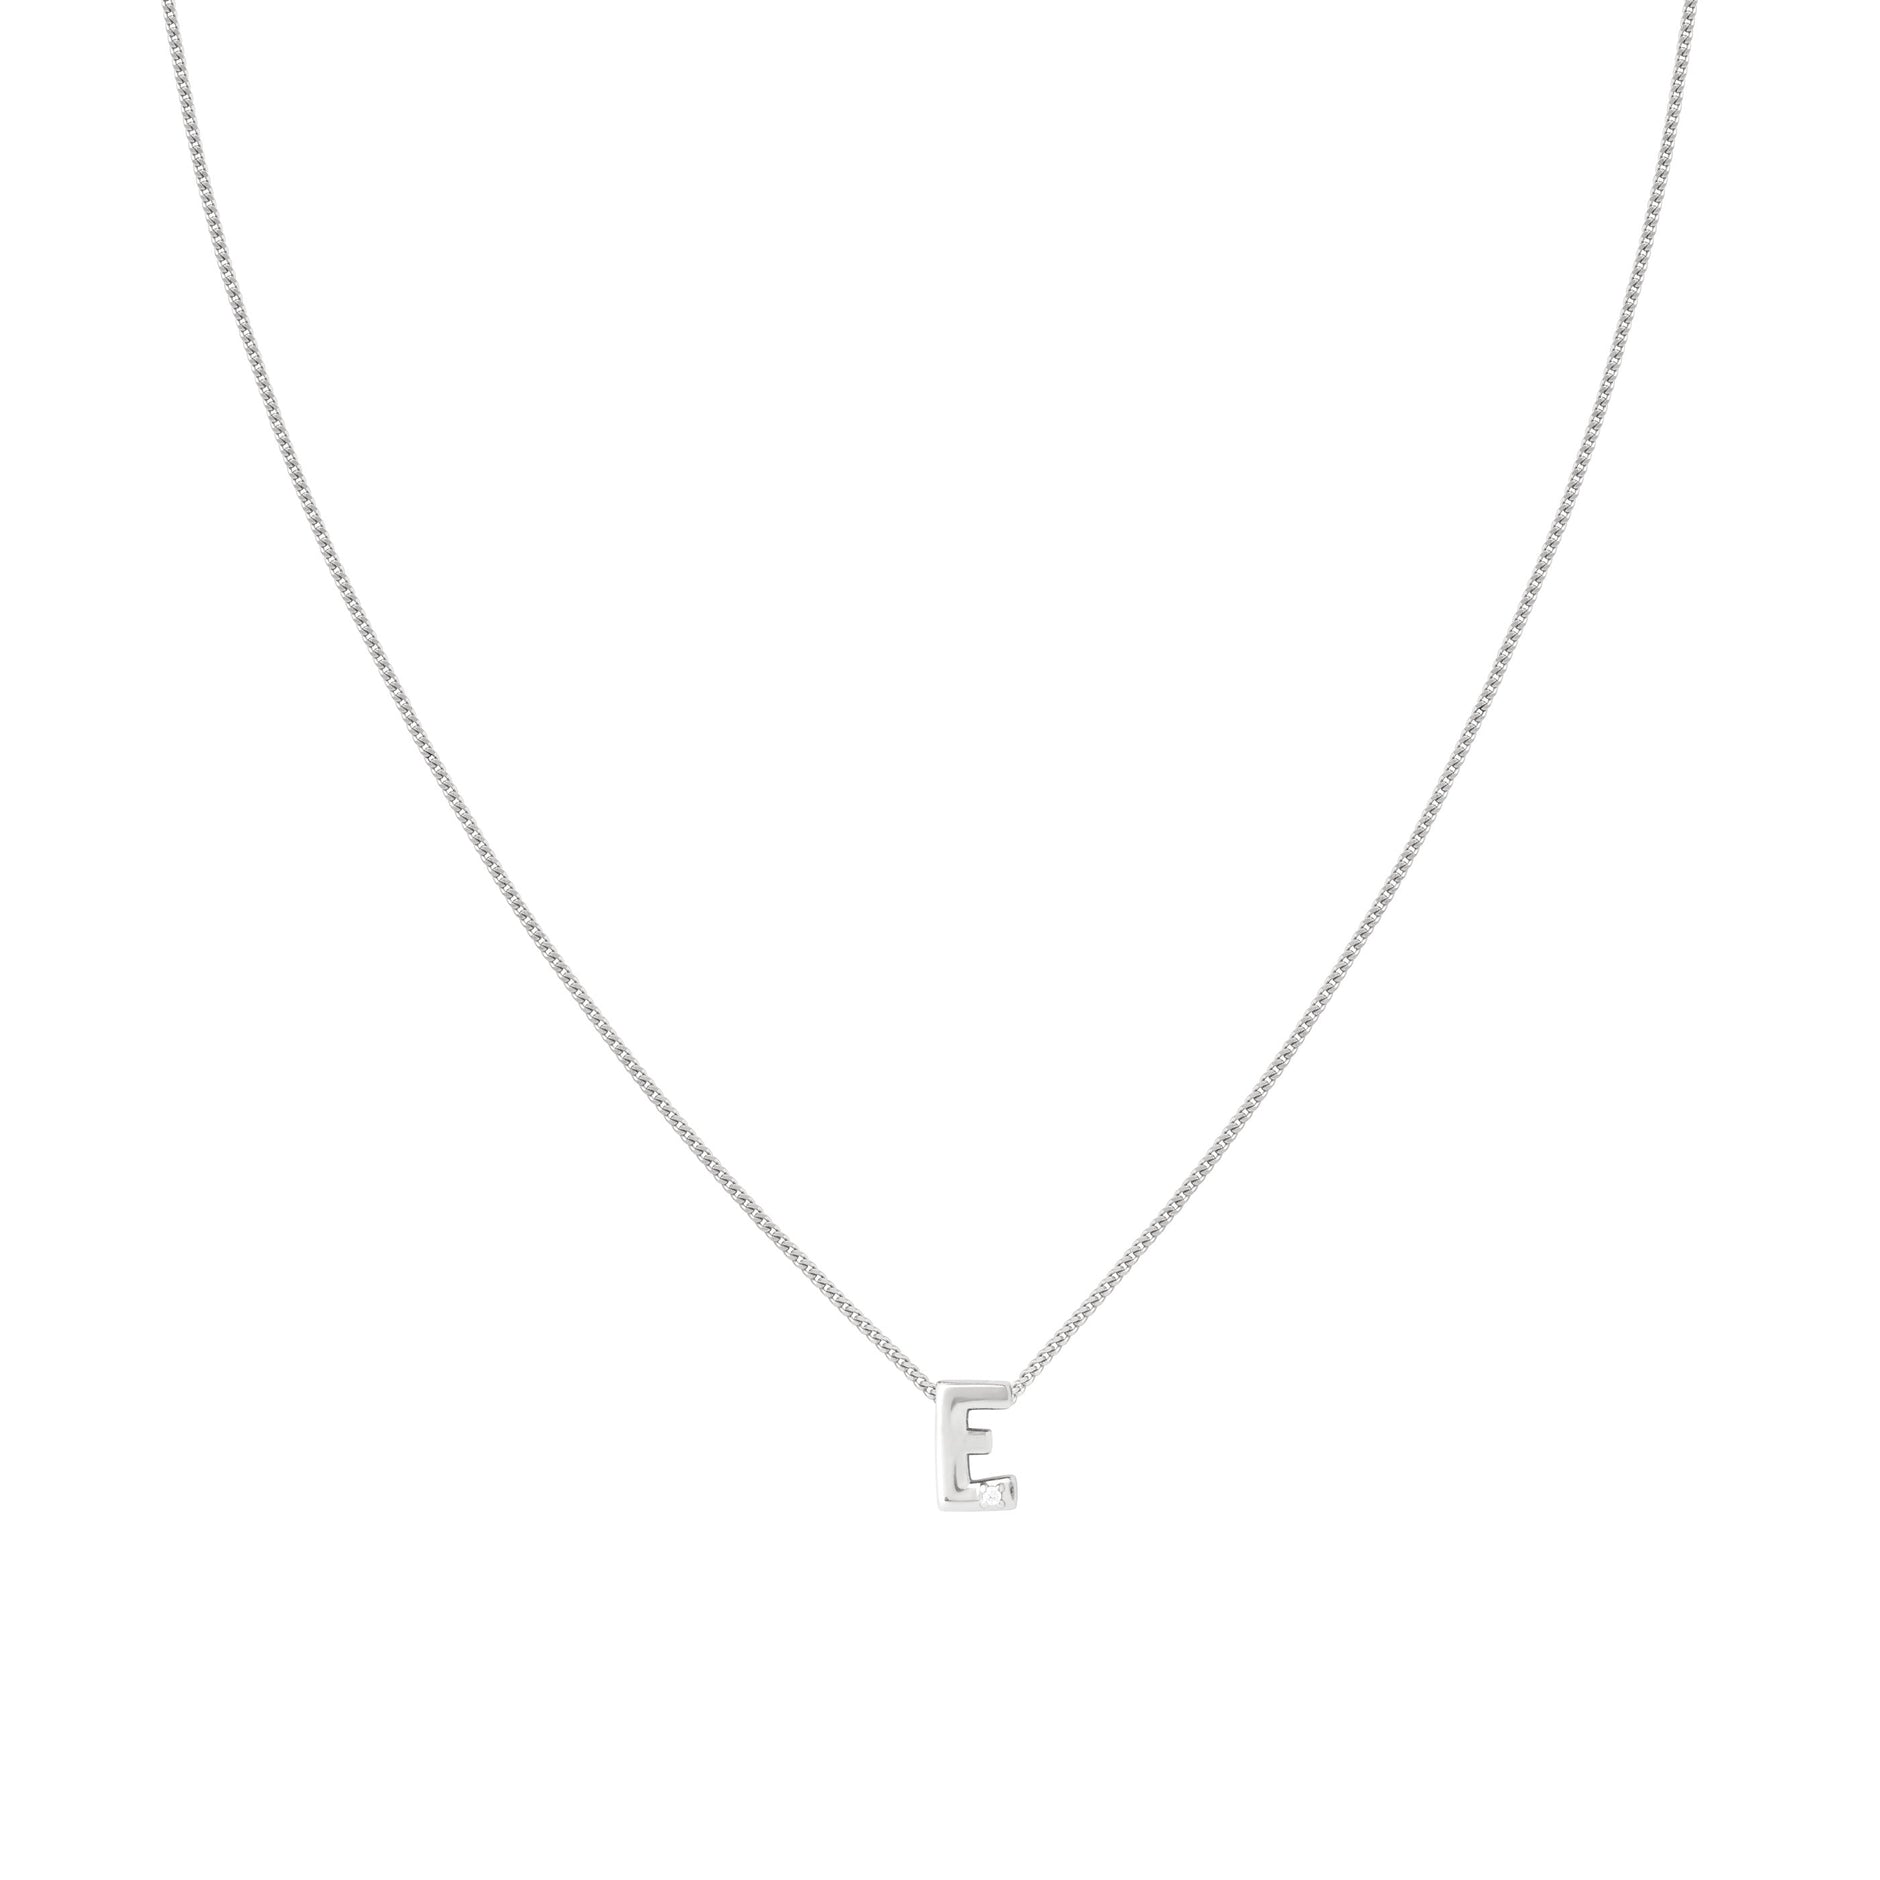 E Initial Pendant Necklace in Silver